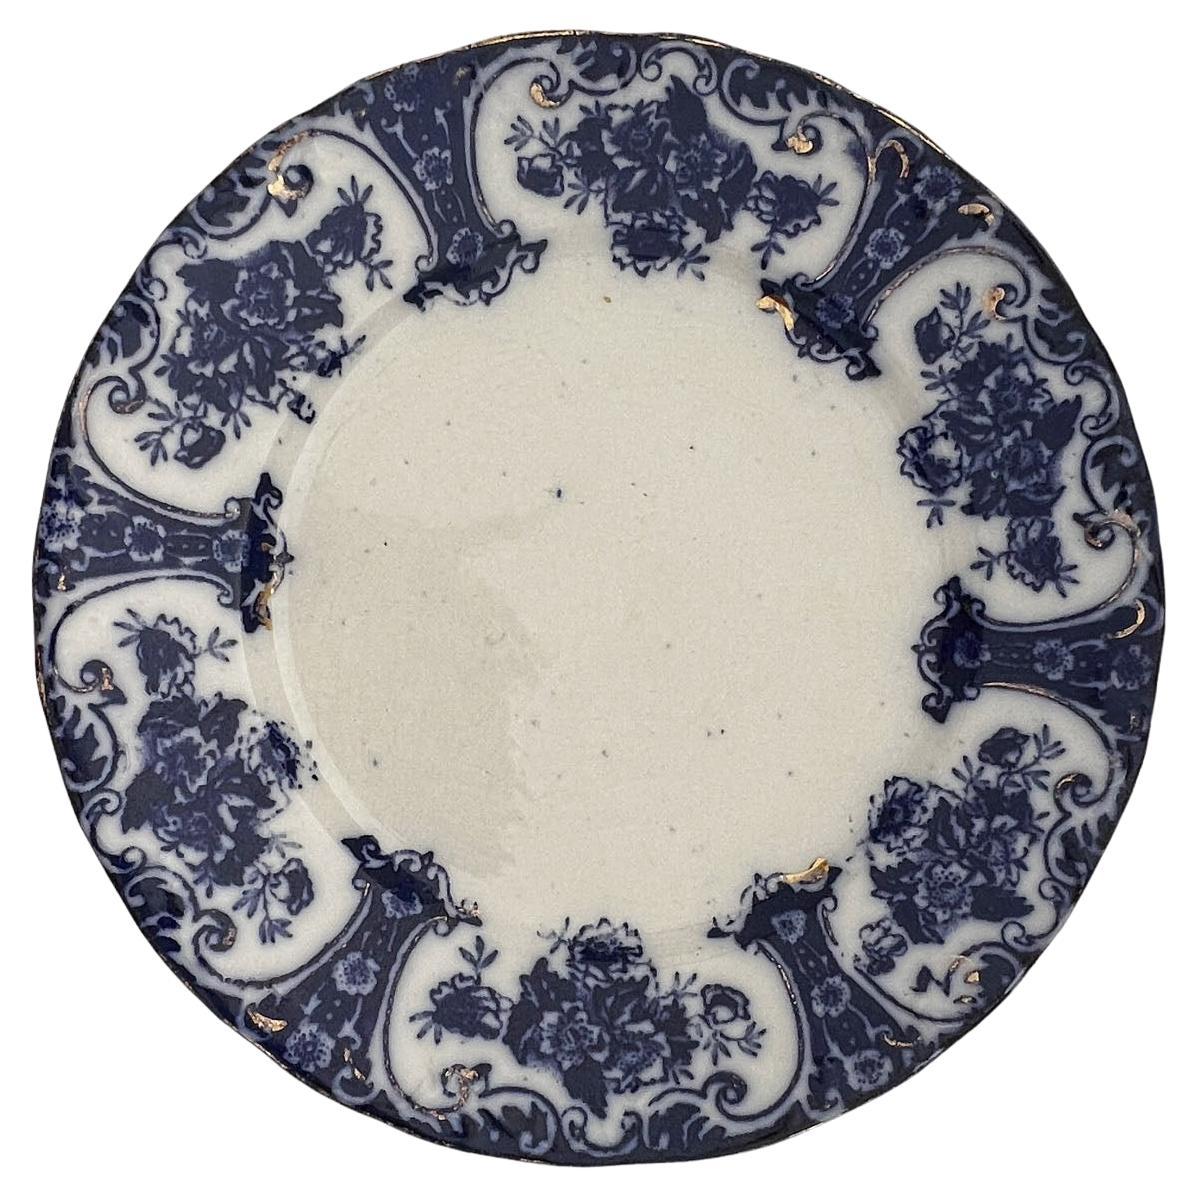 English Flow Blue China Plate